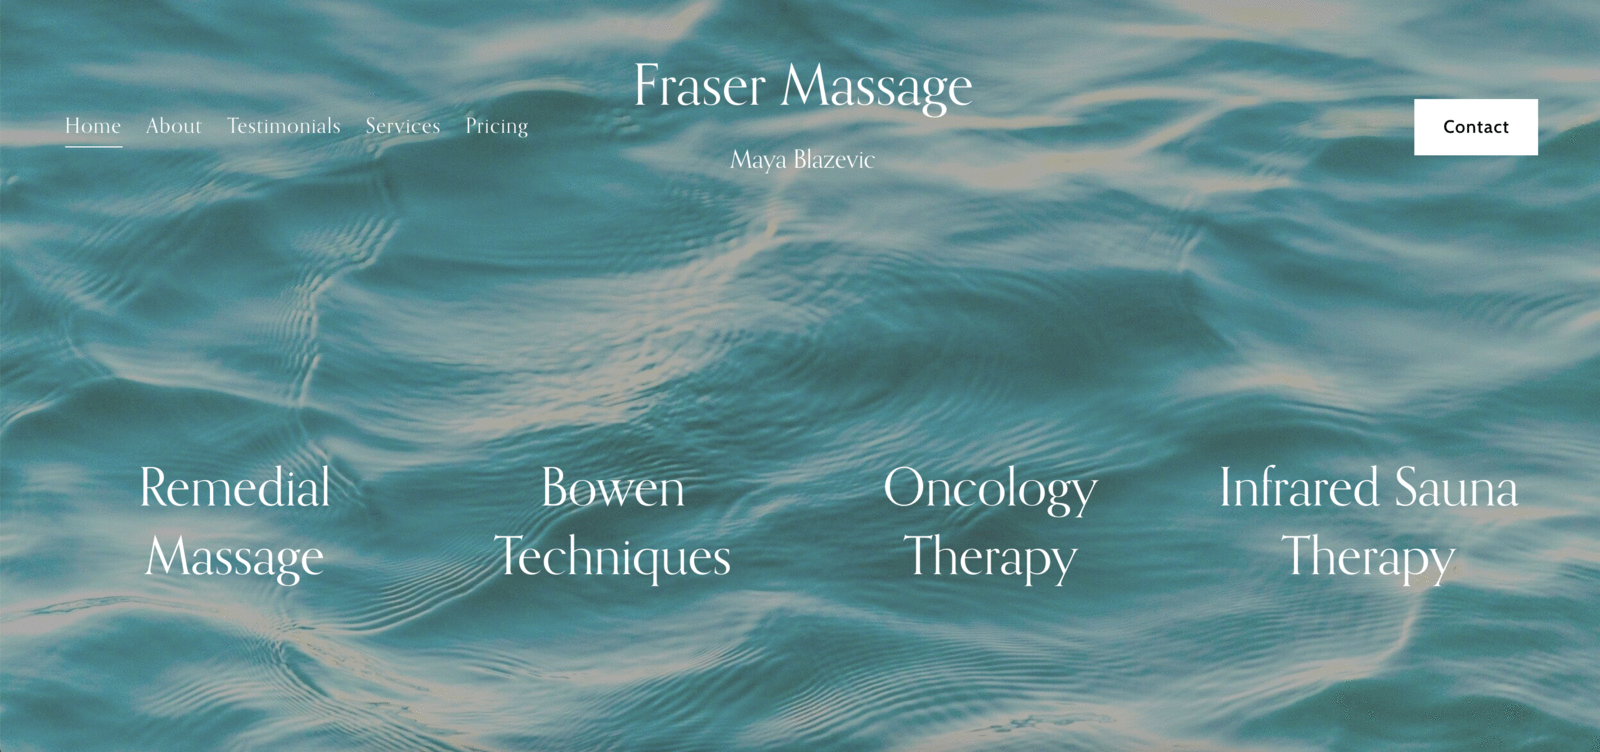 Fraser Massage